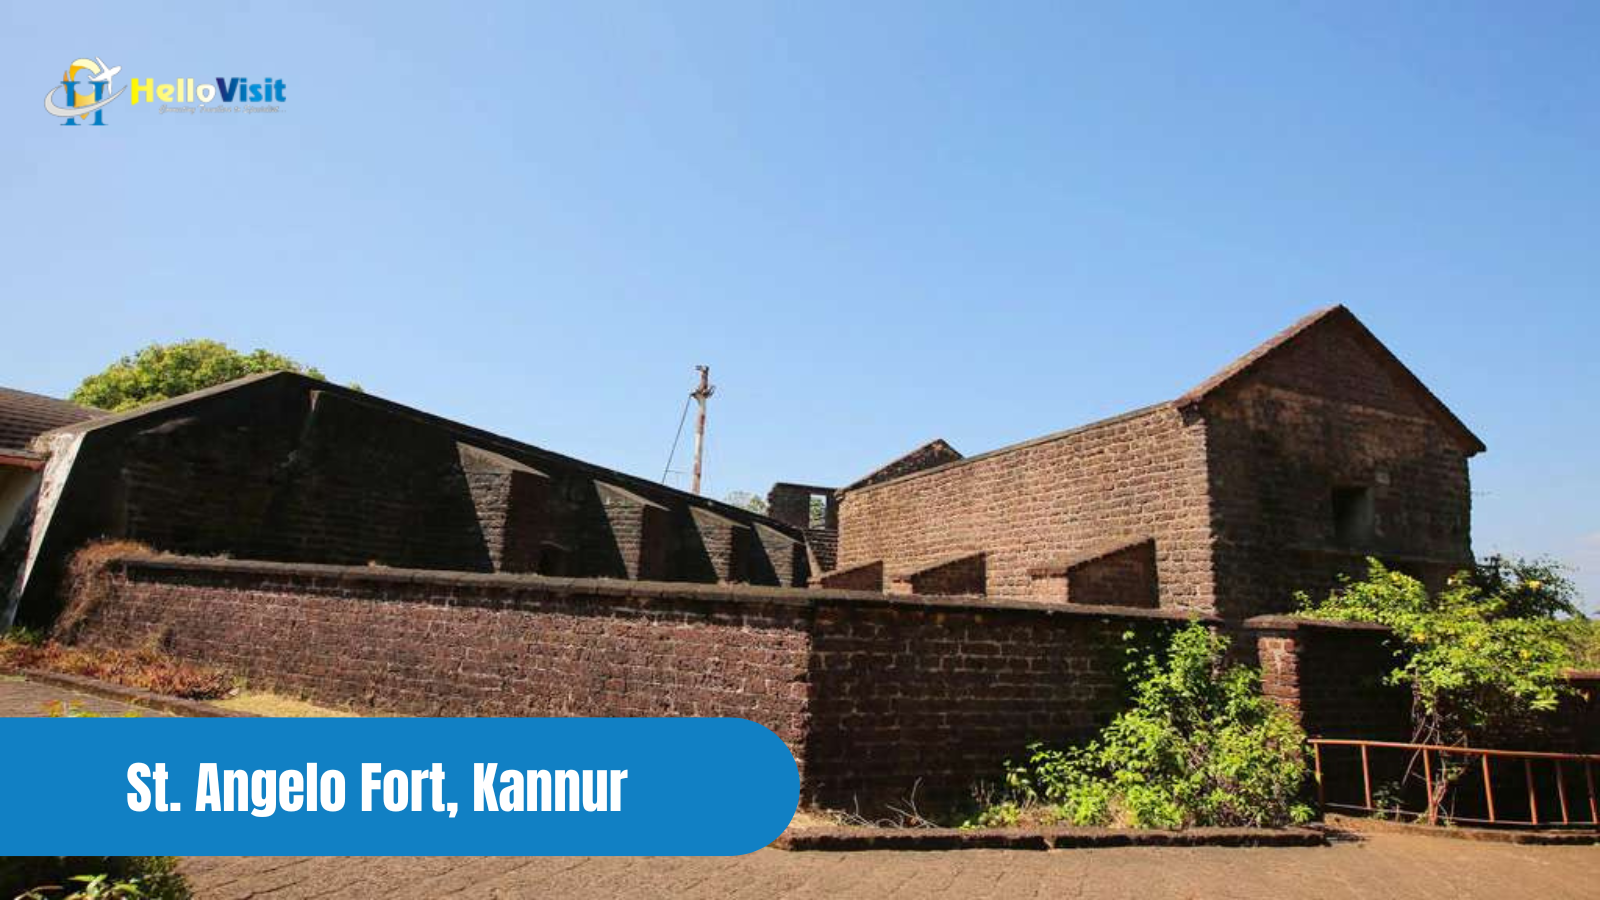 St. Angelo Fort, Kannur